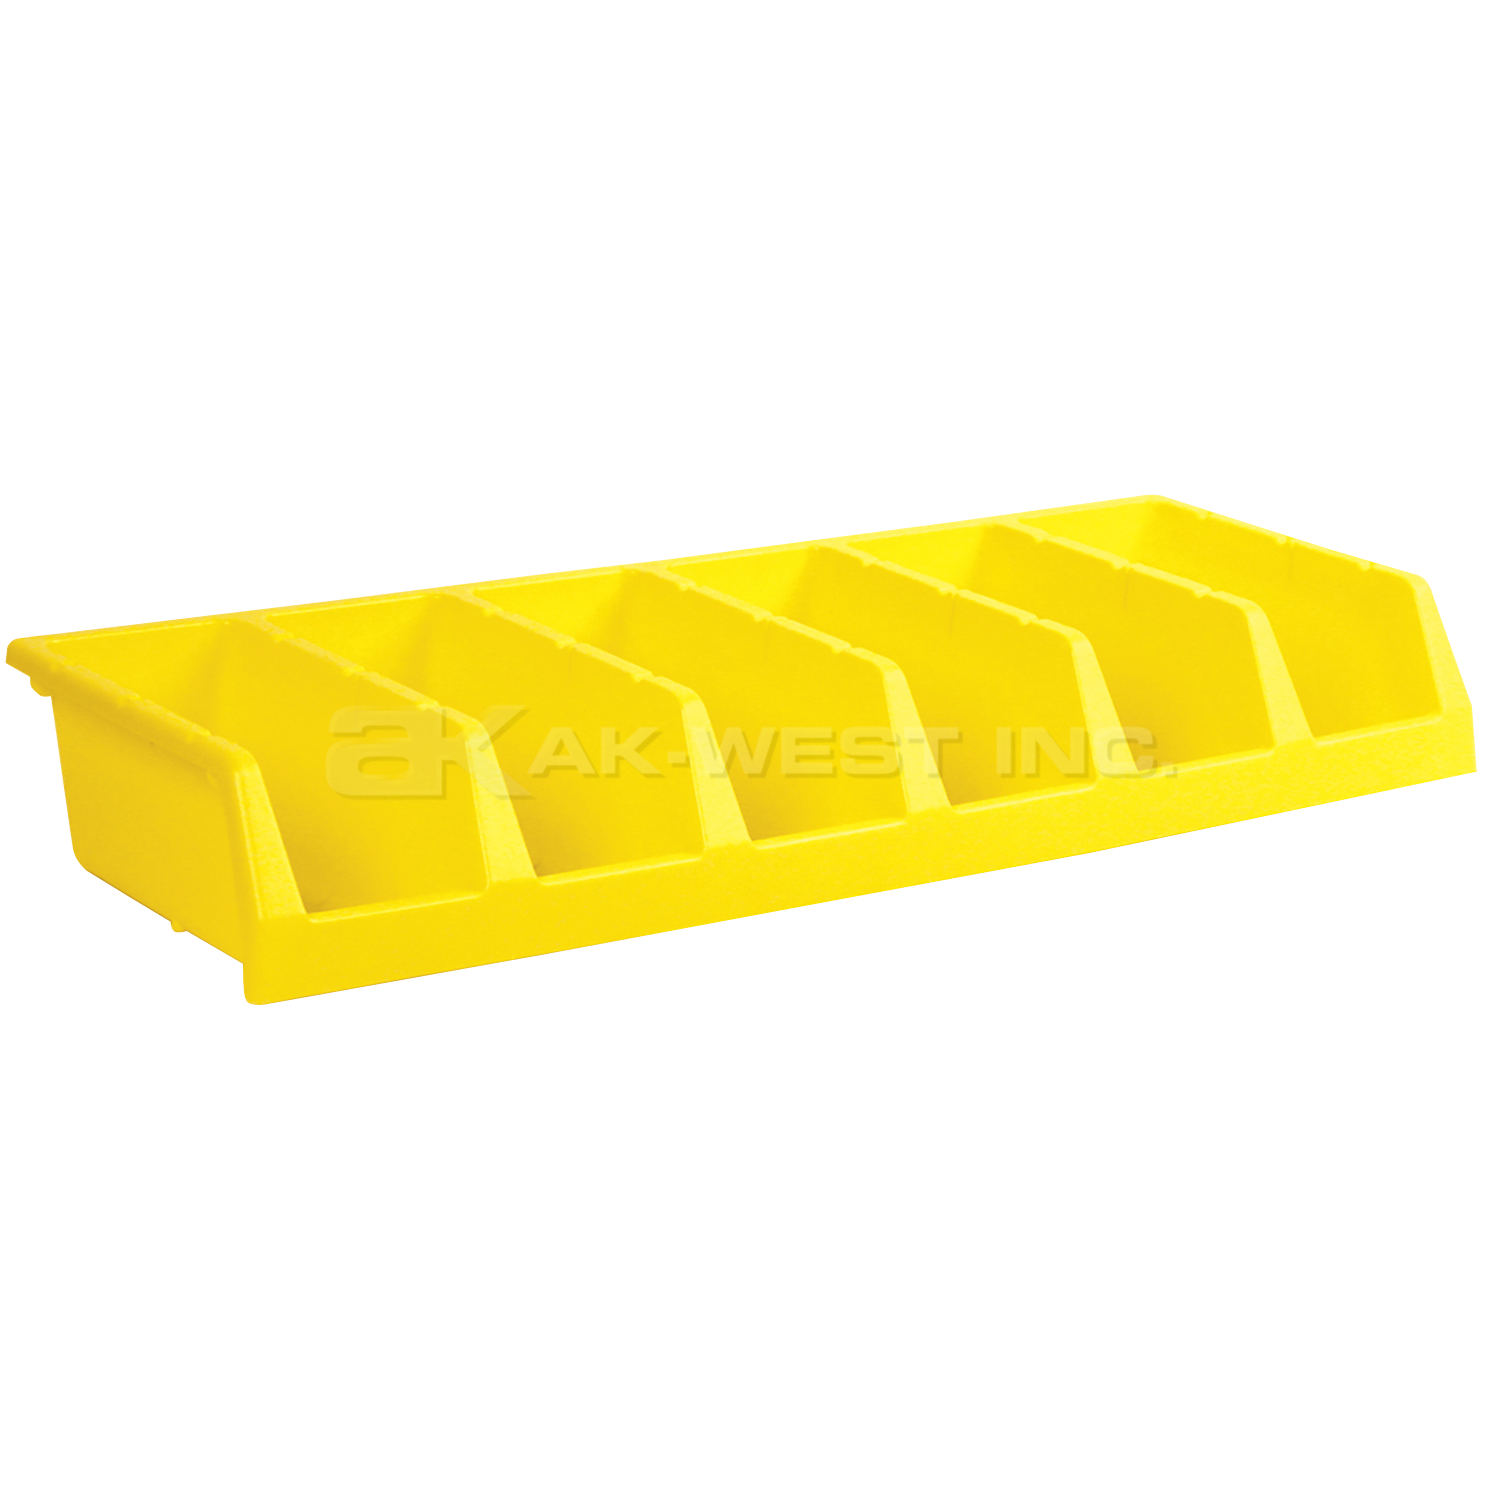 Yellow, 33" x 12" x 5" Systems Bin (5 Per Carton)